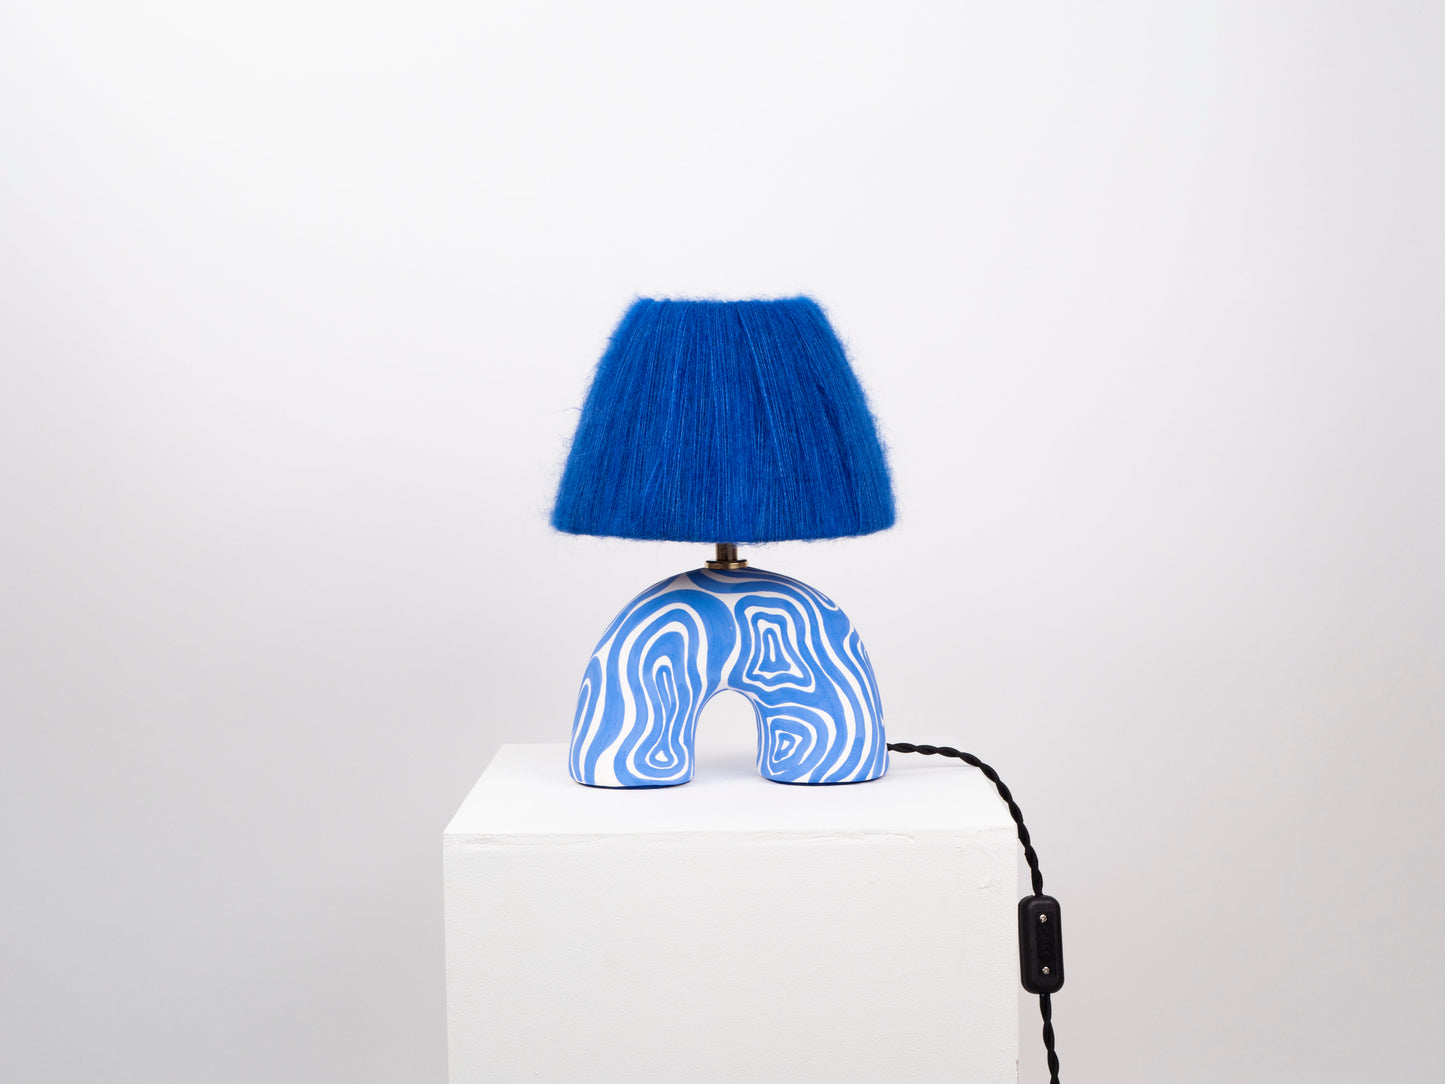 'Me' Table Lamp - Cobalt Wave (Matte)